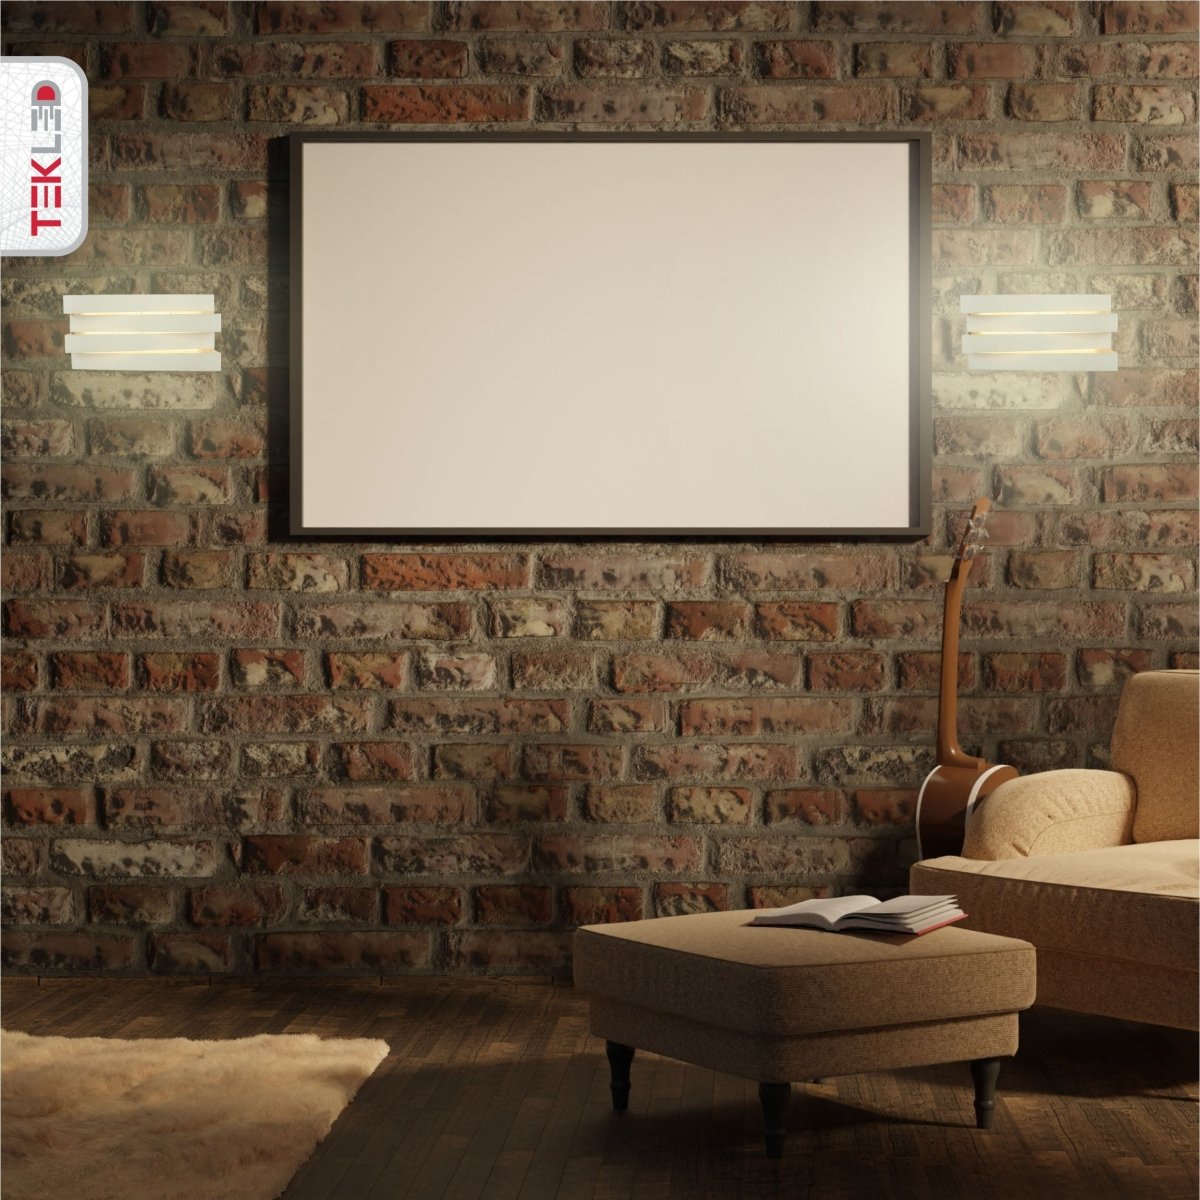 Interior application of LED White Metal Wall Light 12W Warm White 3000K | TEKLED 151-19536